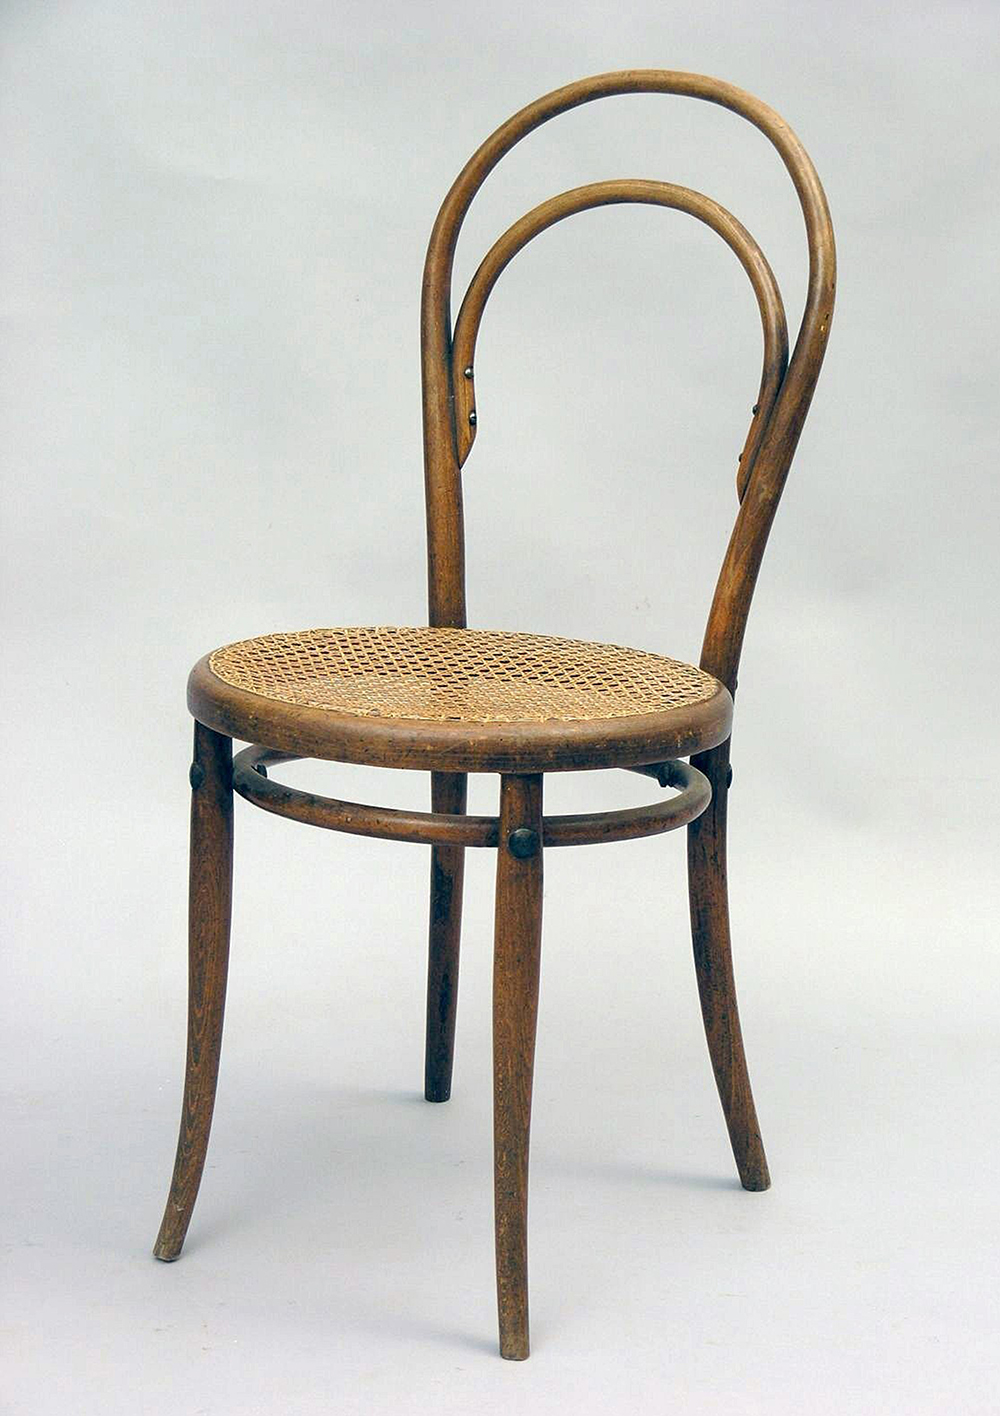 Chair No. 14, Michael Thonet, 1860